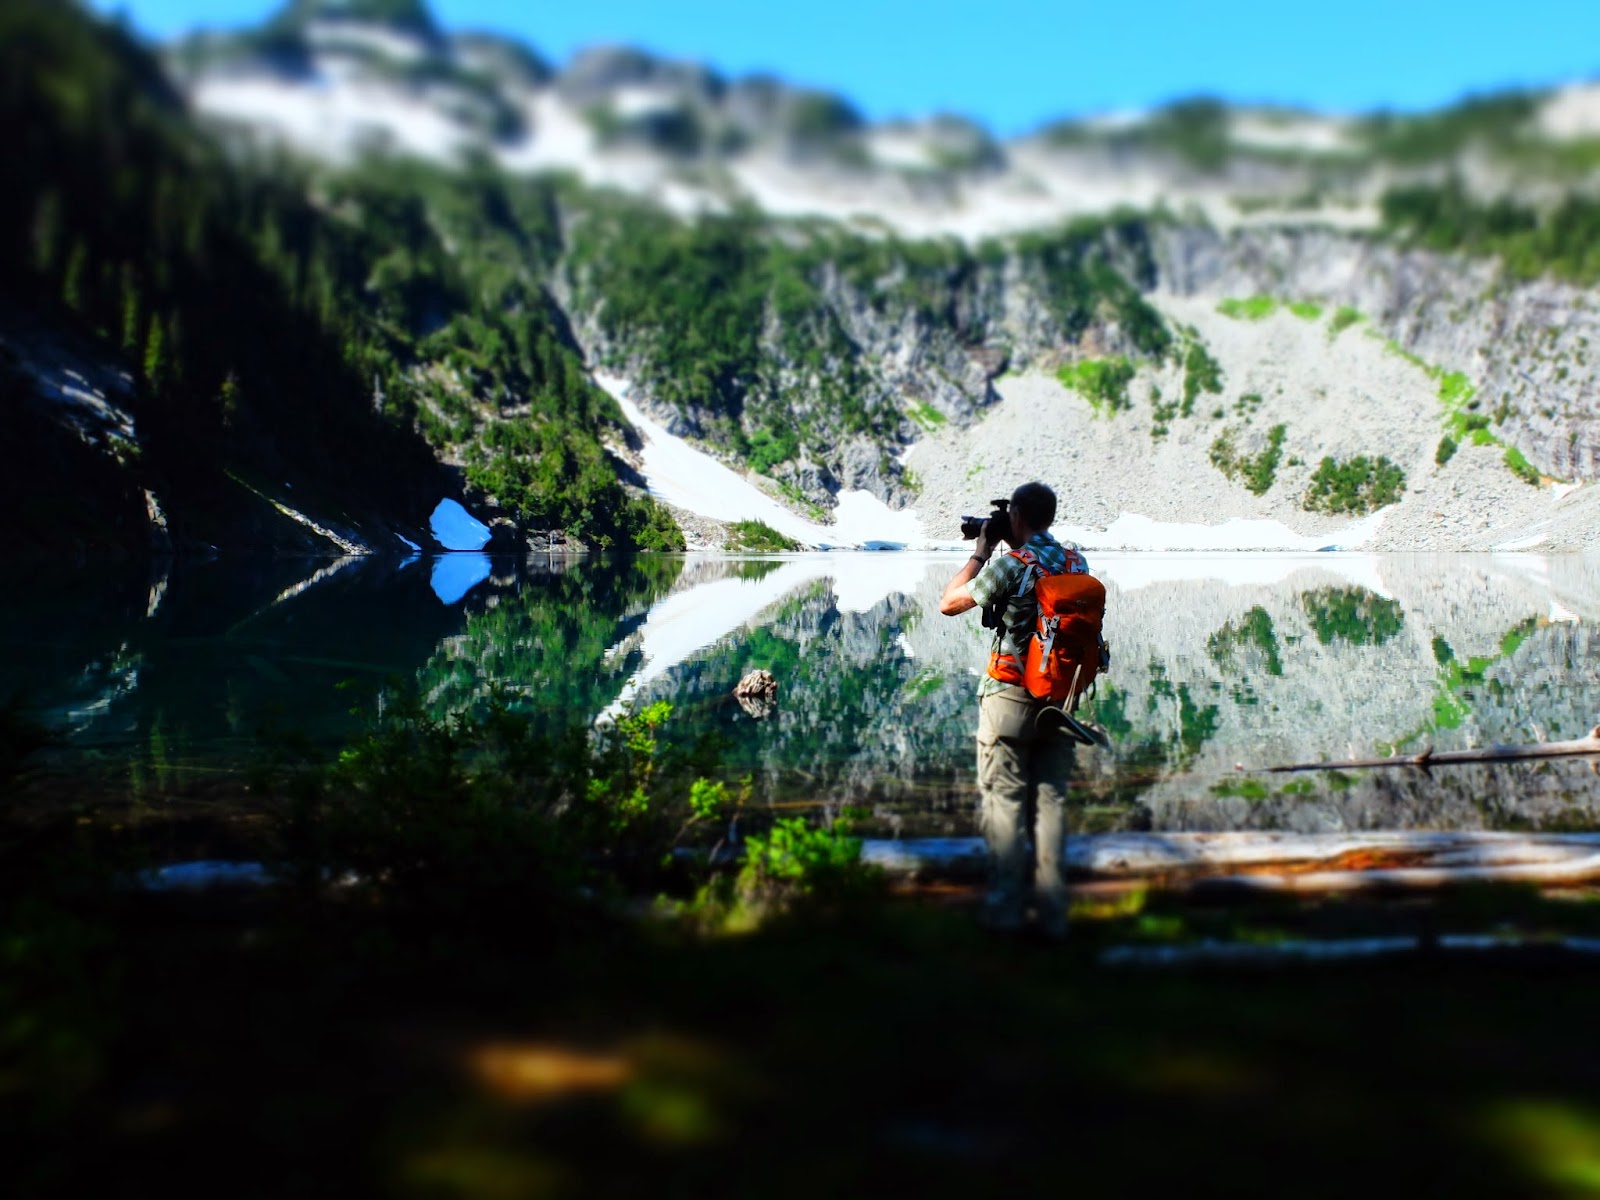 Viewing Malachite Lake Behind the Photographer (miniature effect)